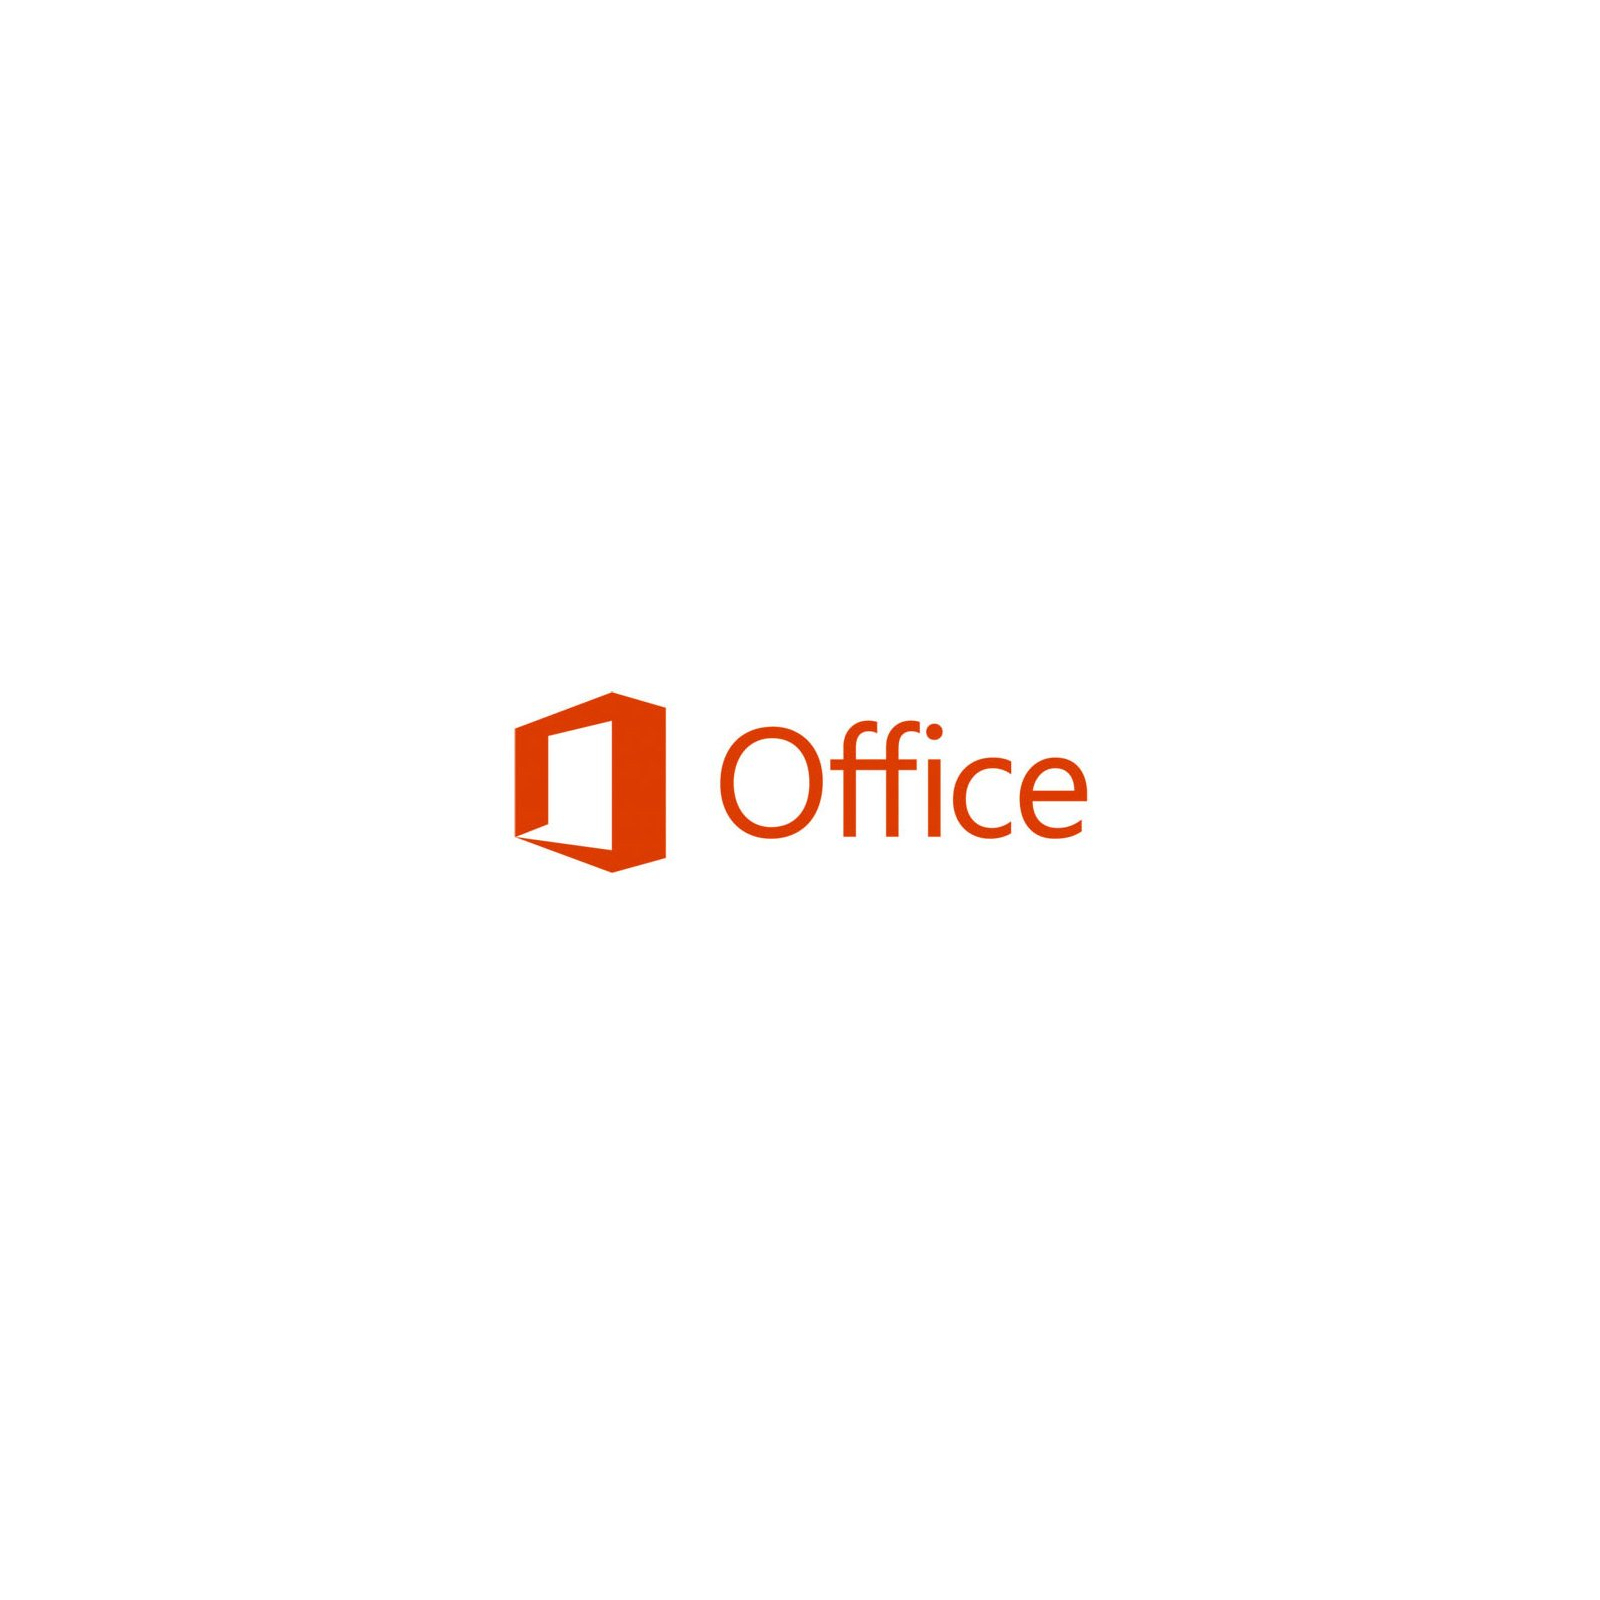 Программная продукция Microsoft OfficeMacStd 2016 SNGL OLP NL Acdmc (3YF-00517)